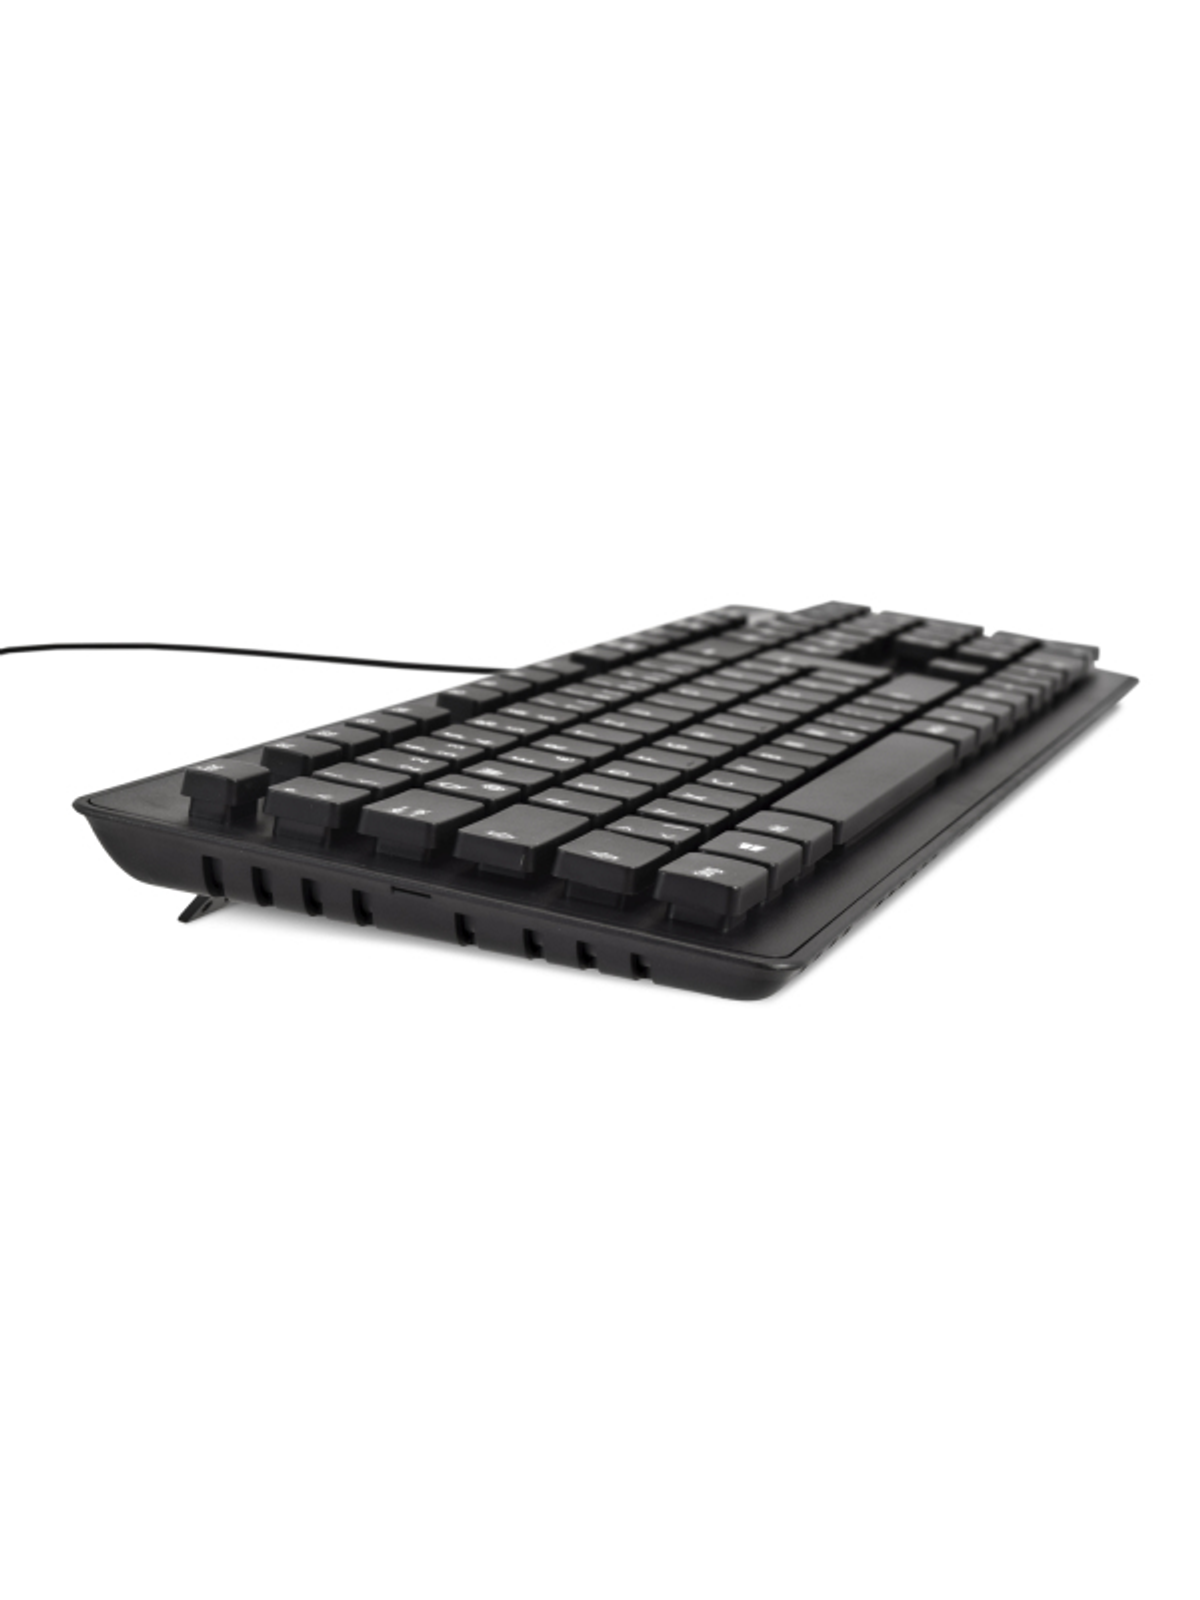 Maus Tastatur CKU700DE, Schwarz Set, V7